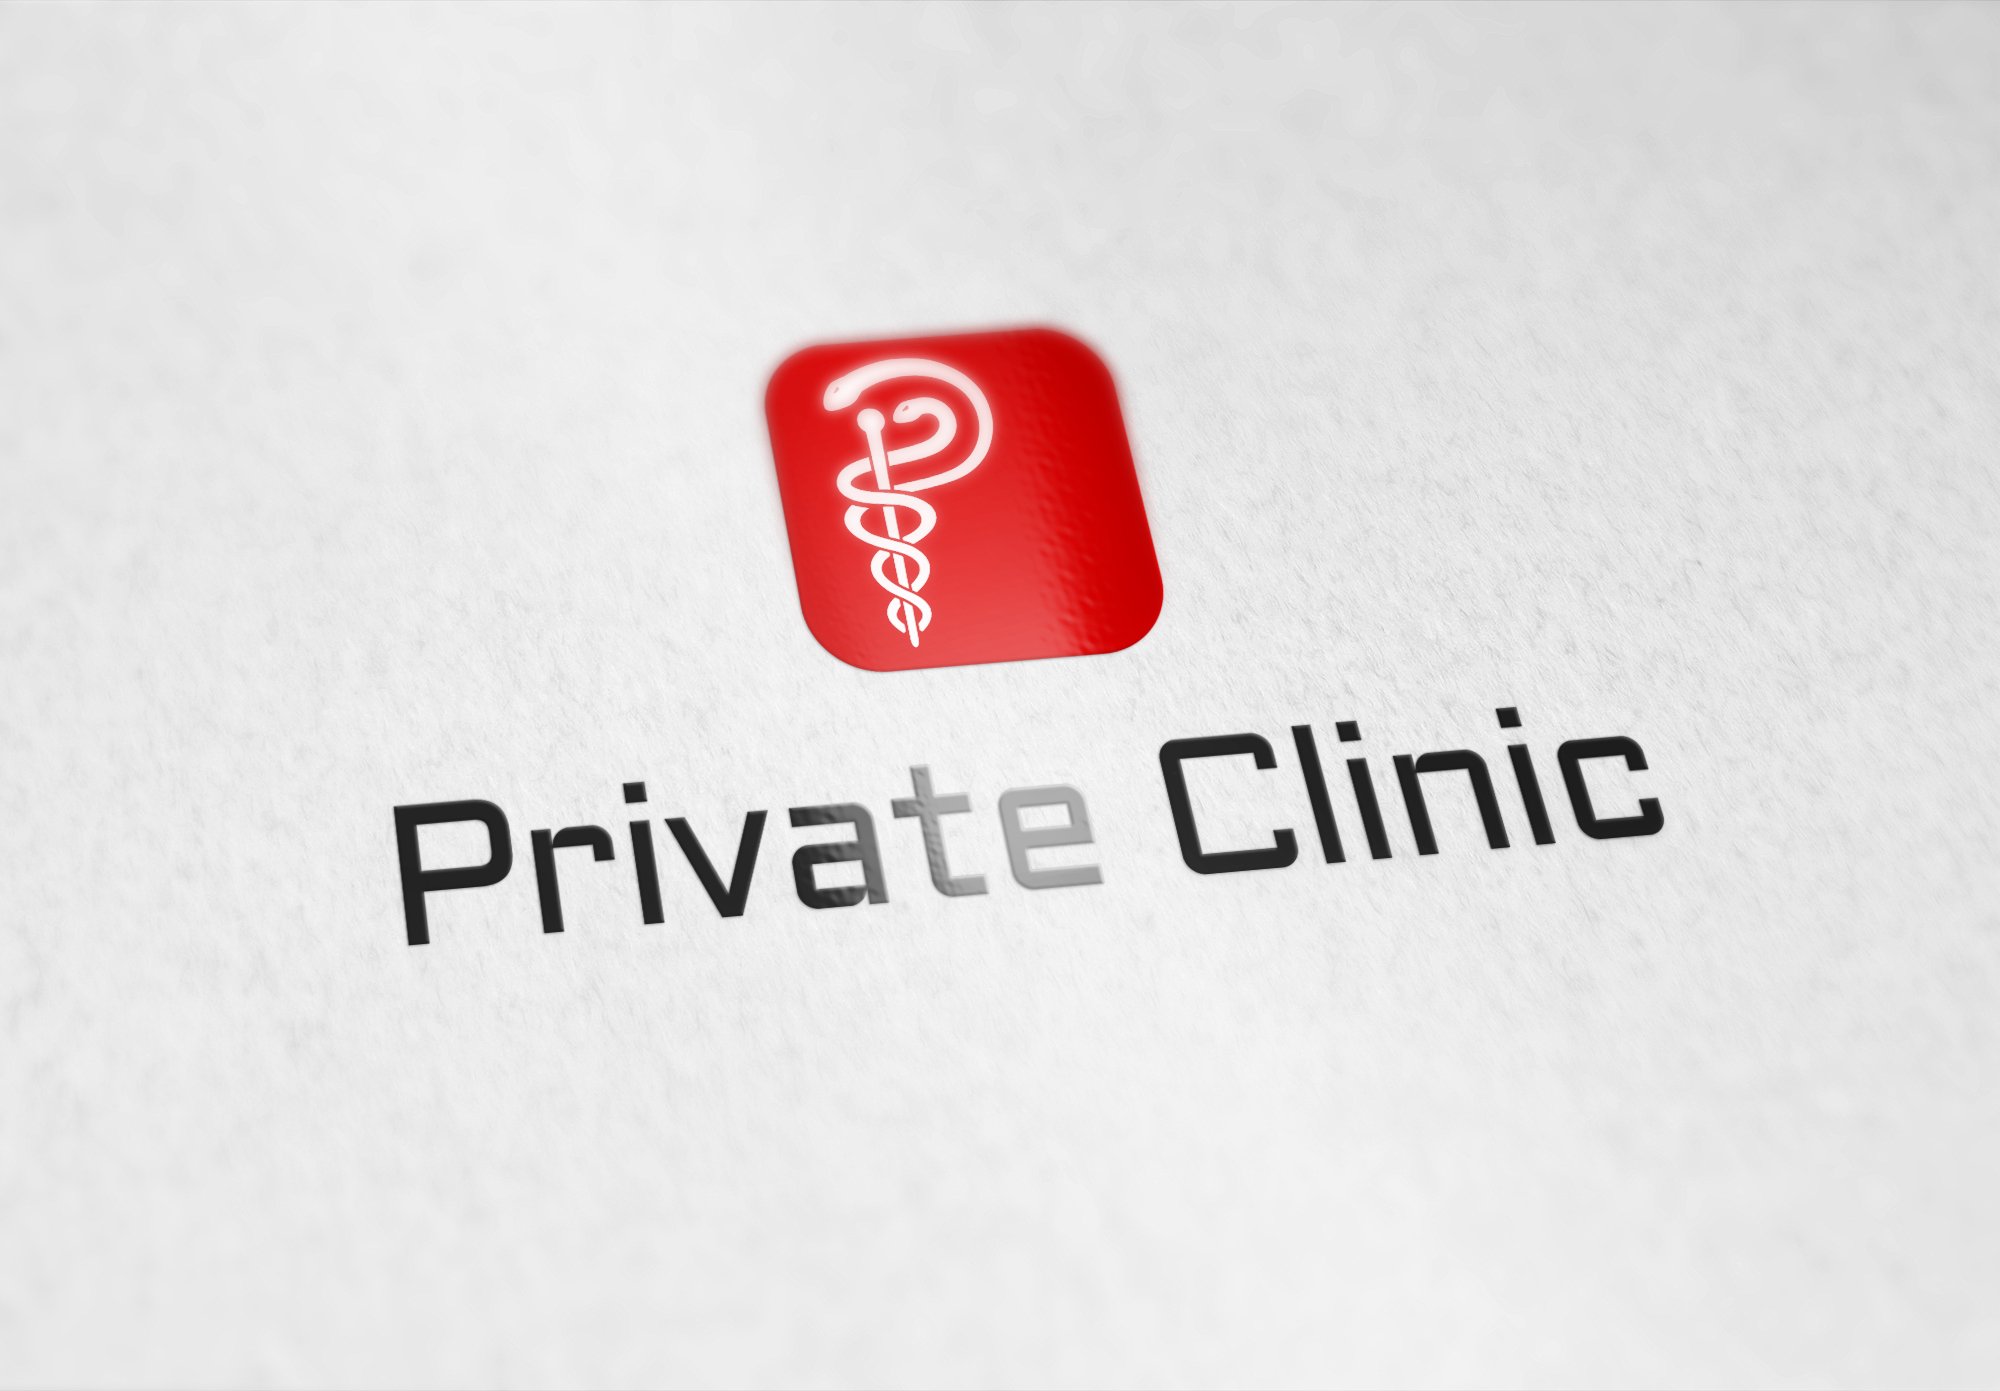 P Medical logo cover image.